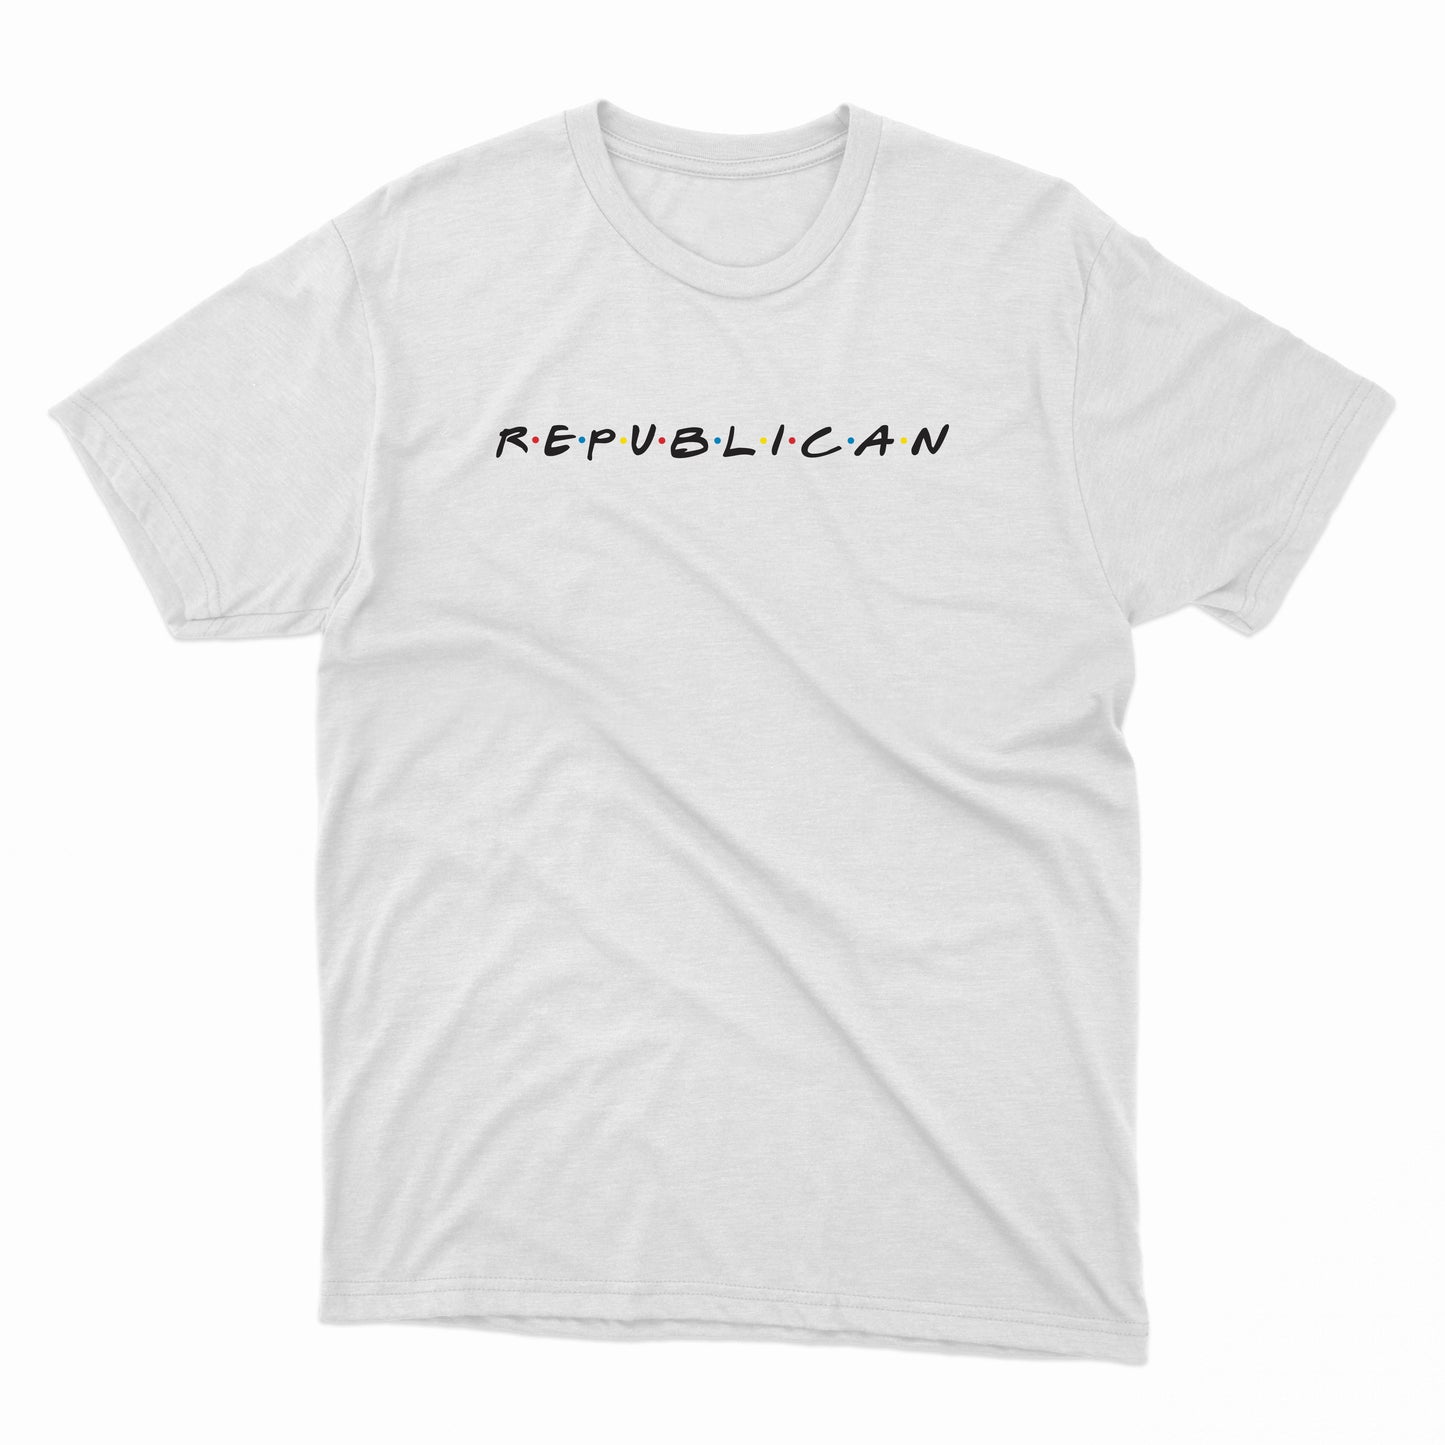 REPUBLICAN Shirt - Friends Edition